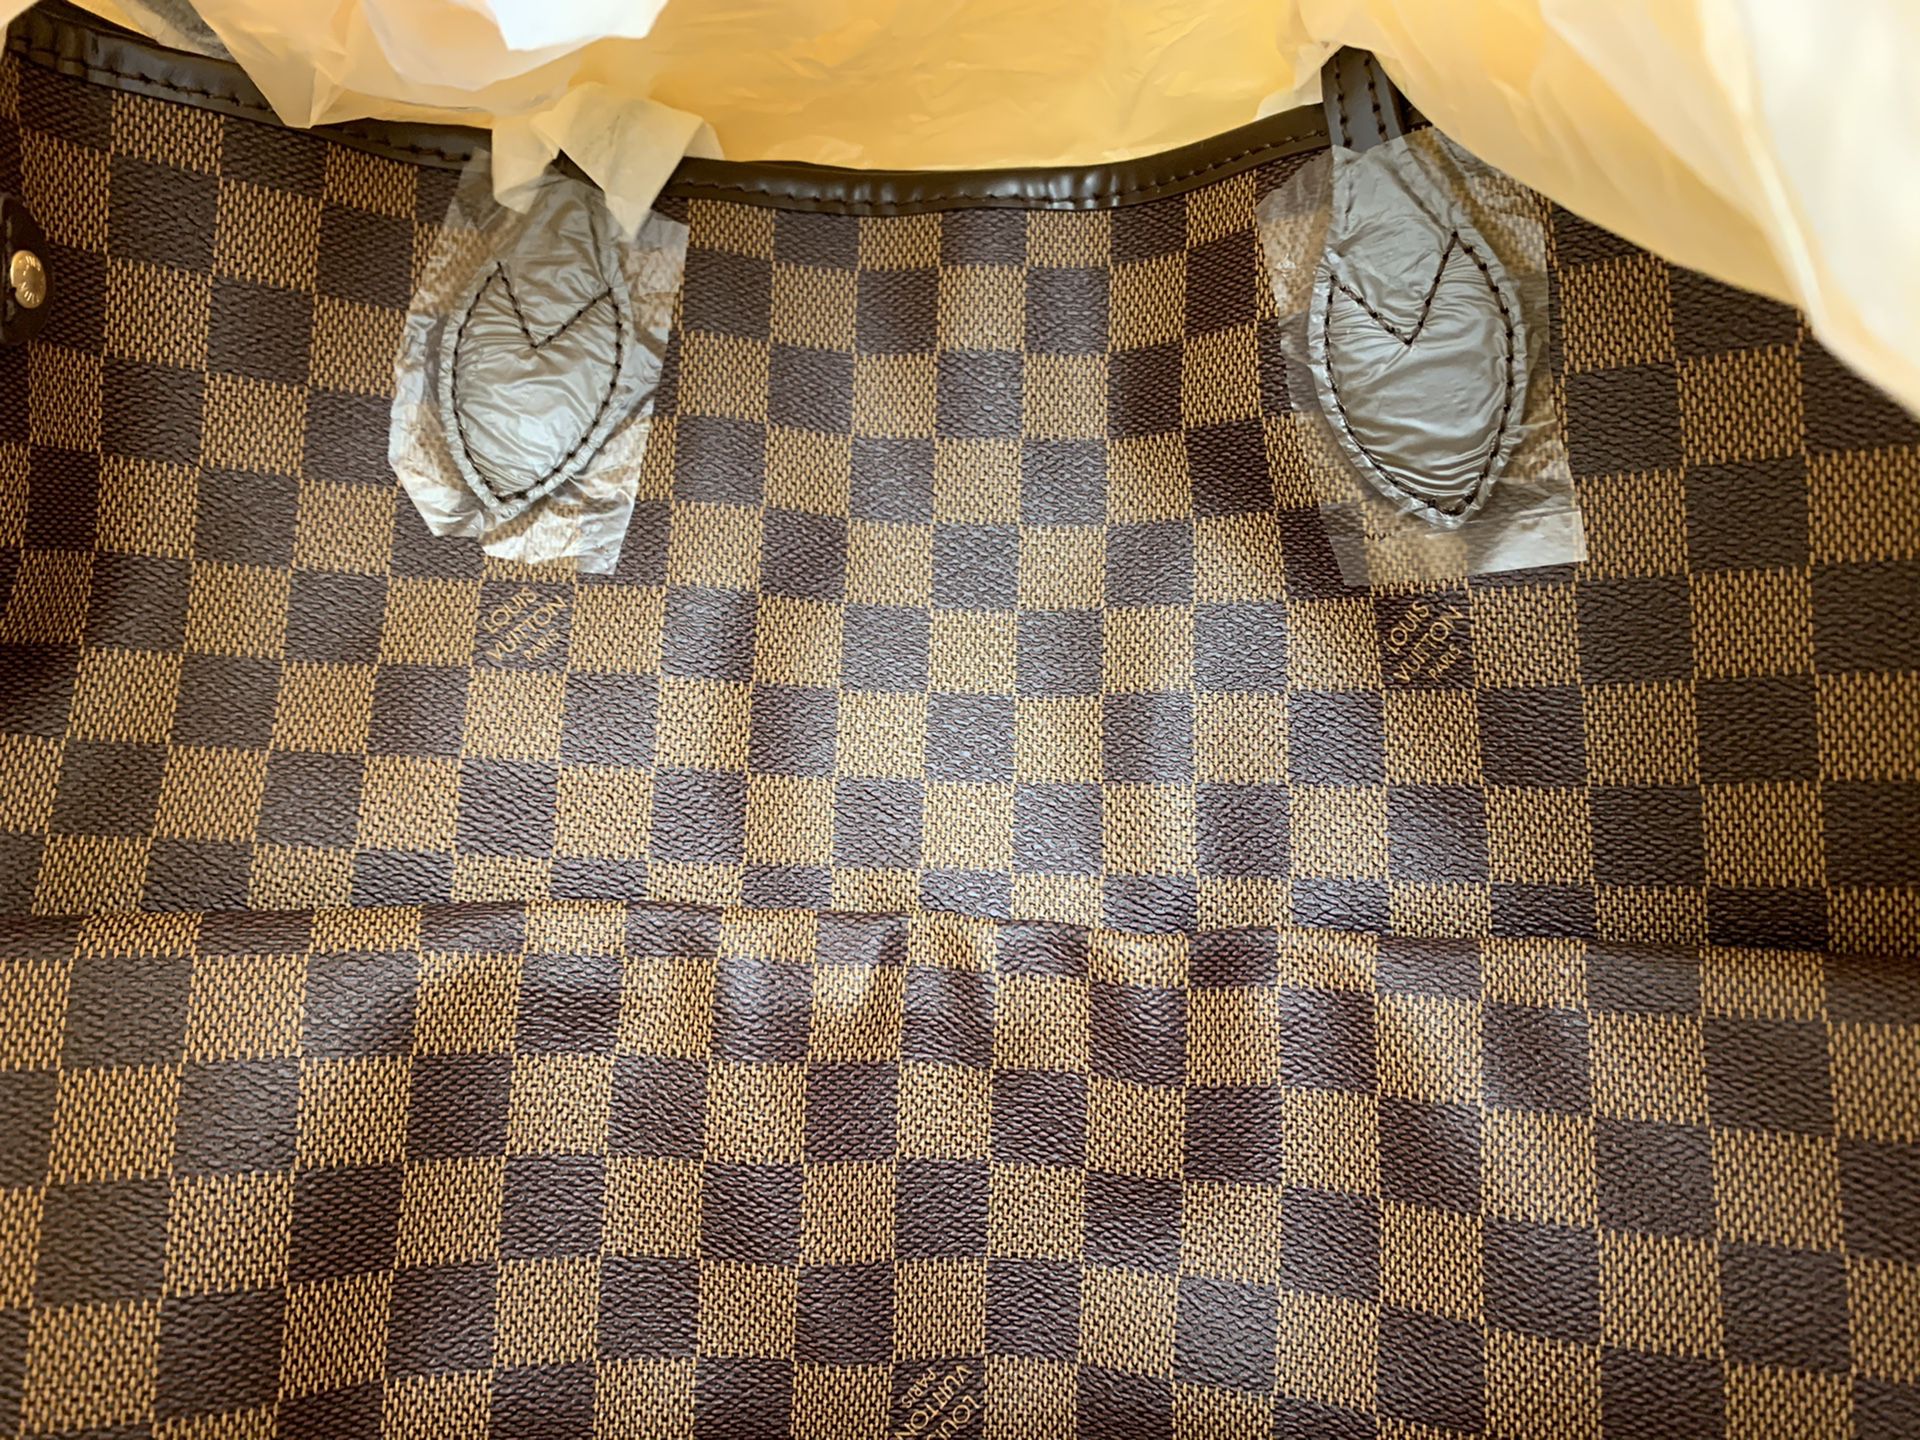 Louis Vuitton Bag ... BRAND NEW !!!! $400 or best offer